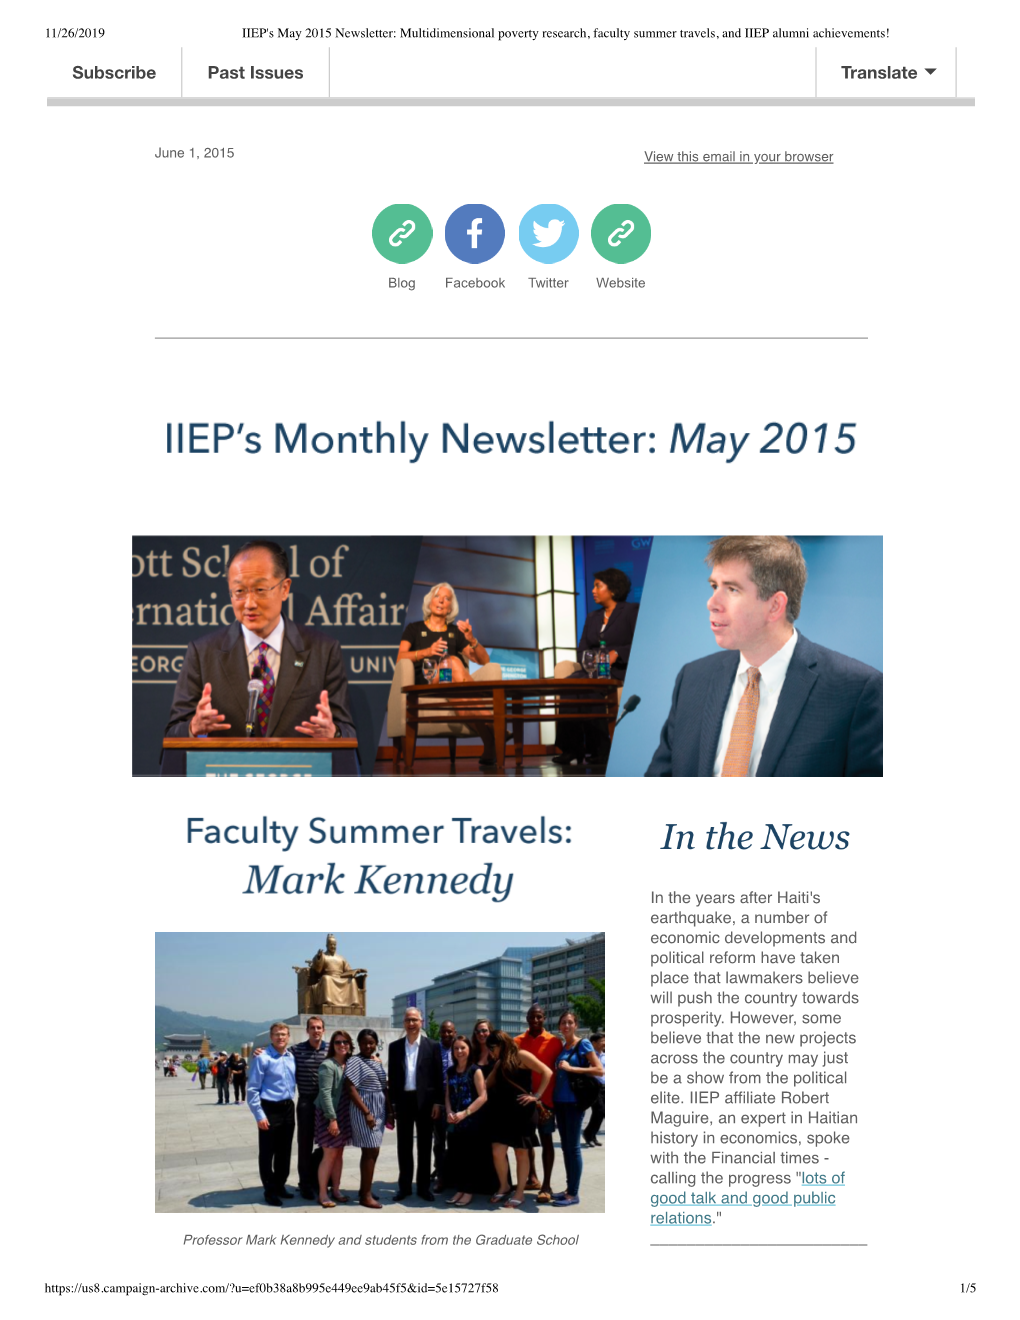 IIEP Monthly Newsletter – May 2015